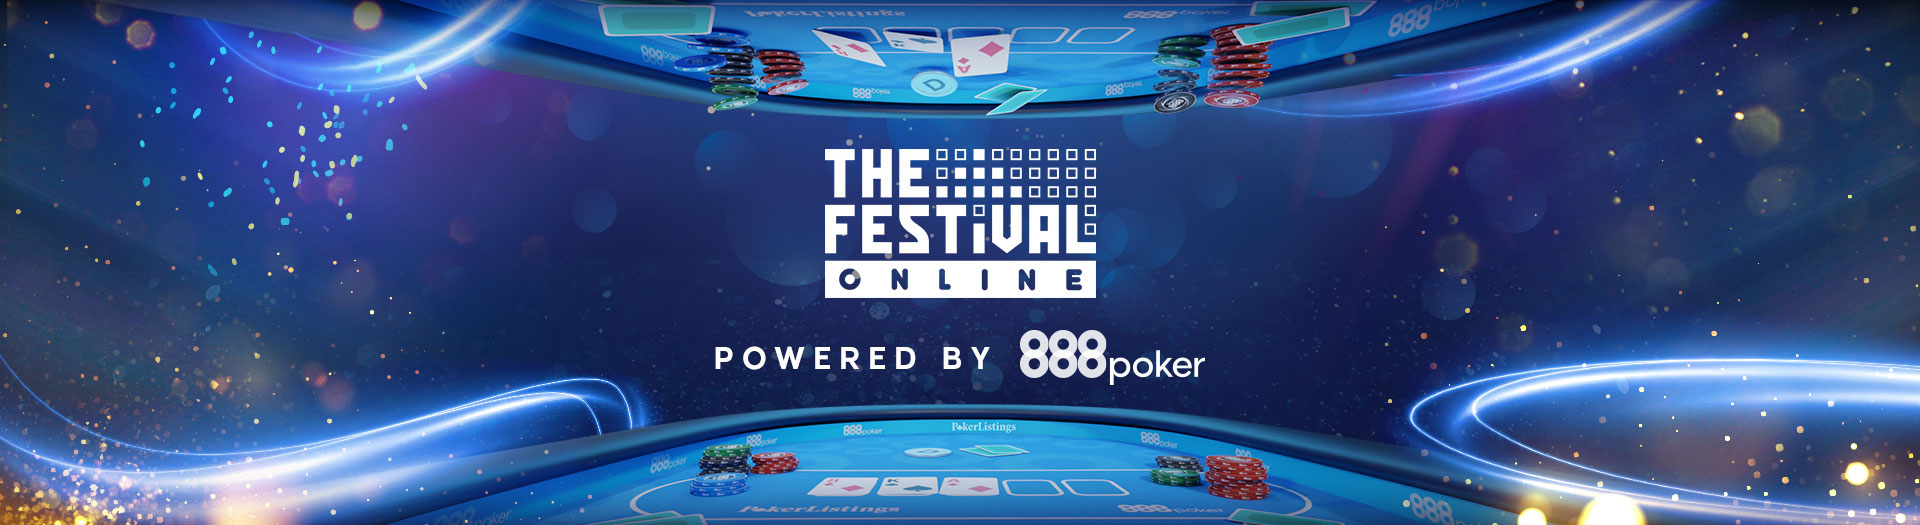 TS-55237-The-Festival-Online-PokerListings-LP-image-PC-1678185631126_tcm2032-581536